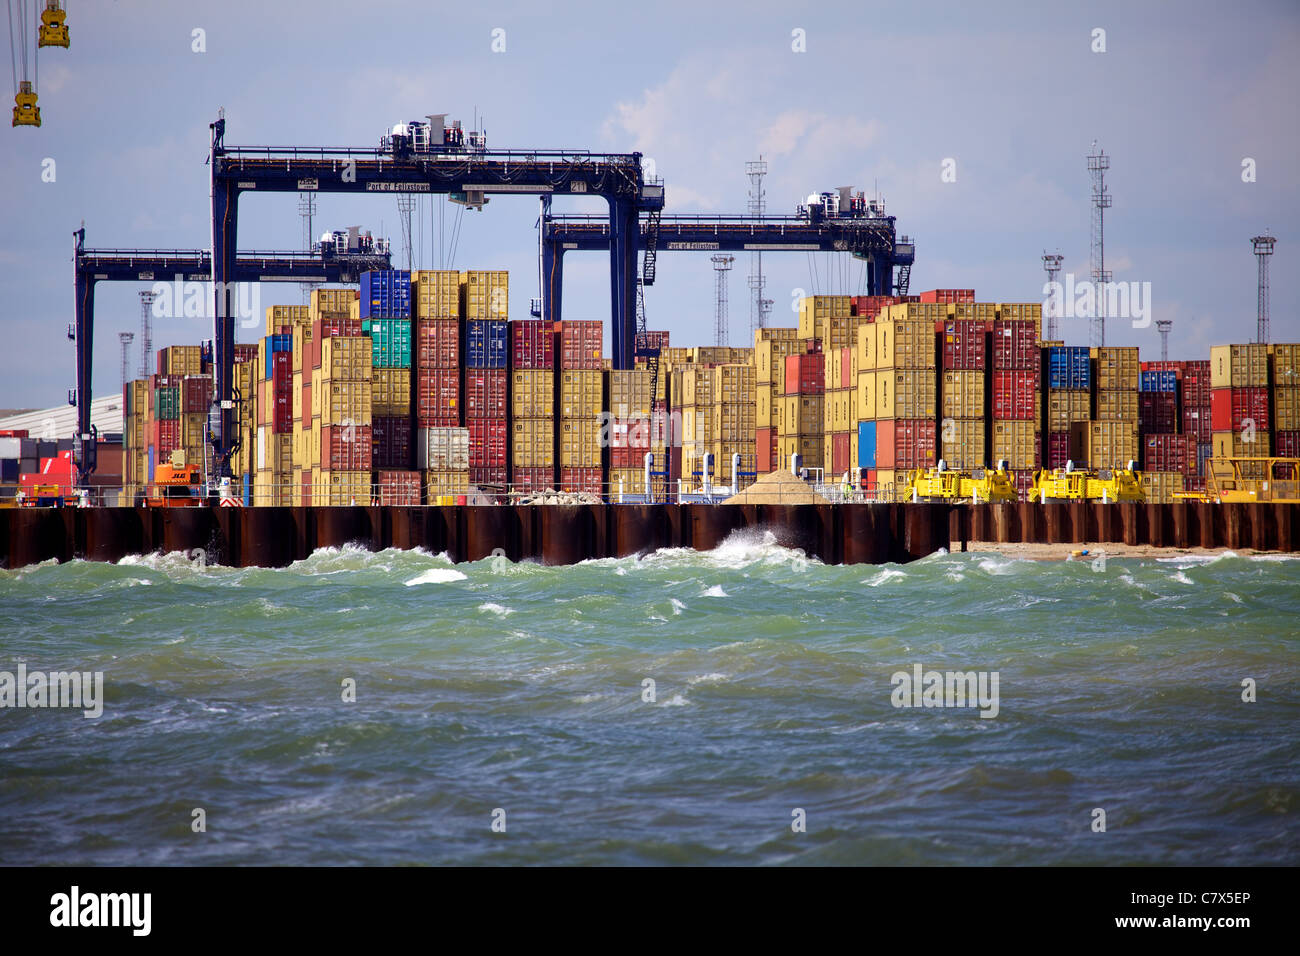 Global Britain International Trade - Port of Felixstowe International Trade - Containers stacked up at Felixstowe Port in the UK Stock Photo